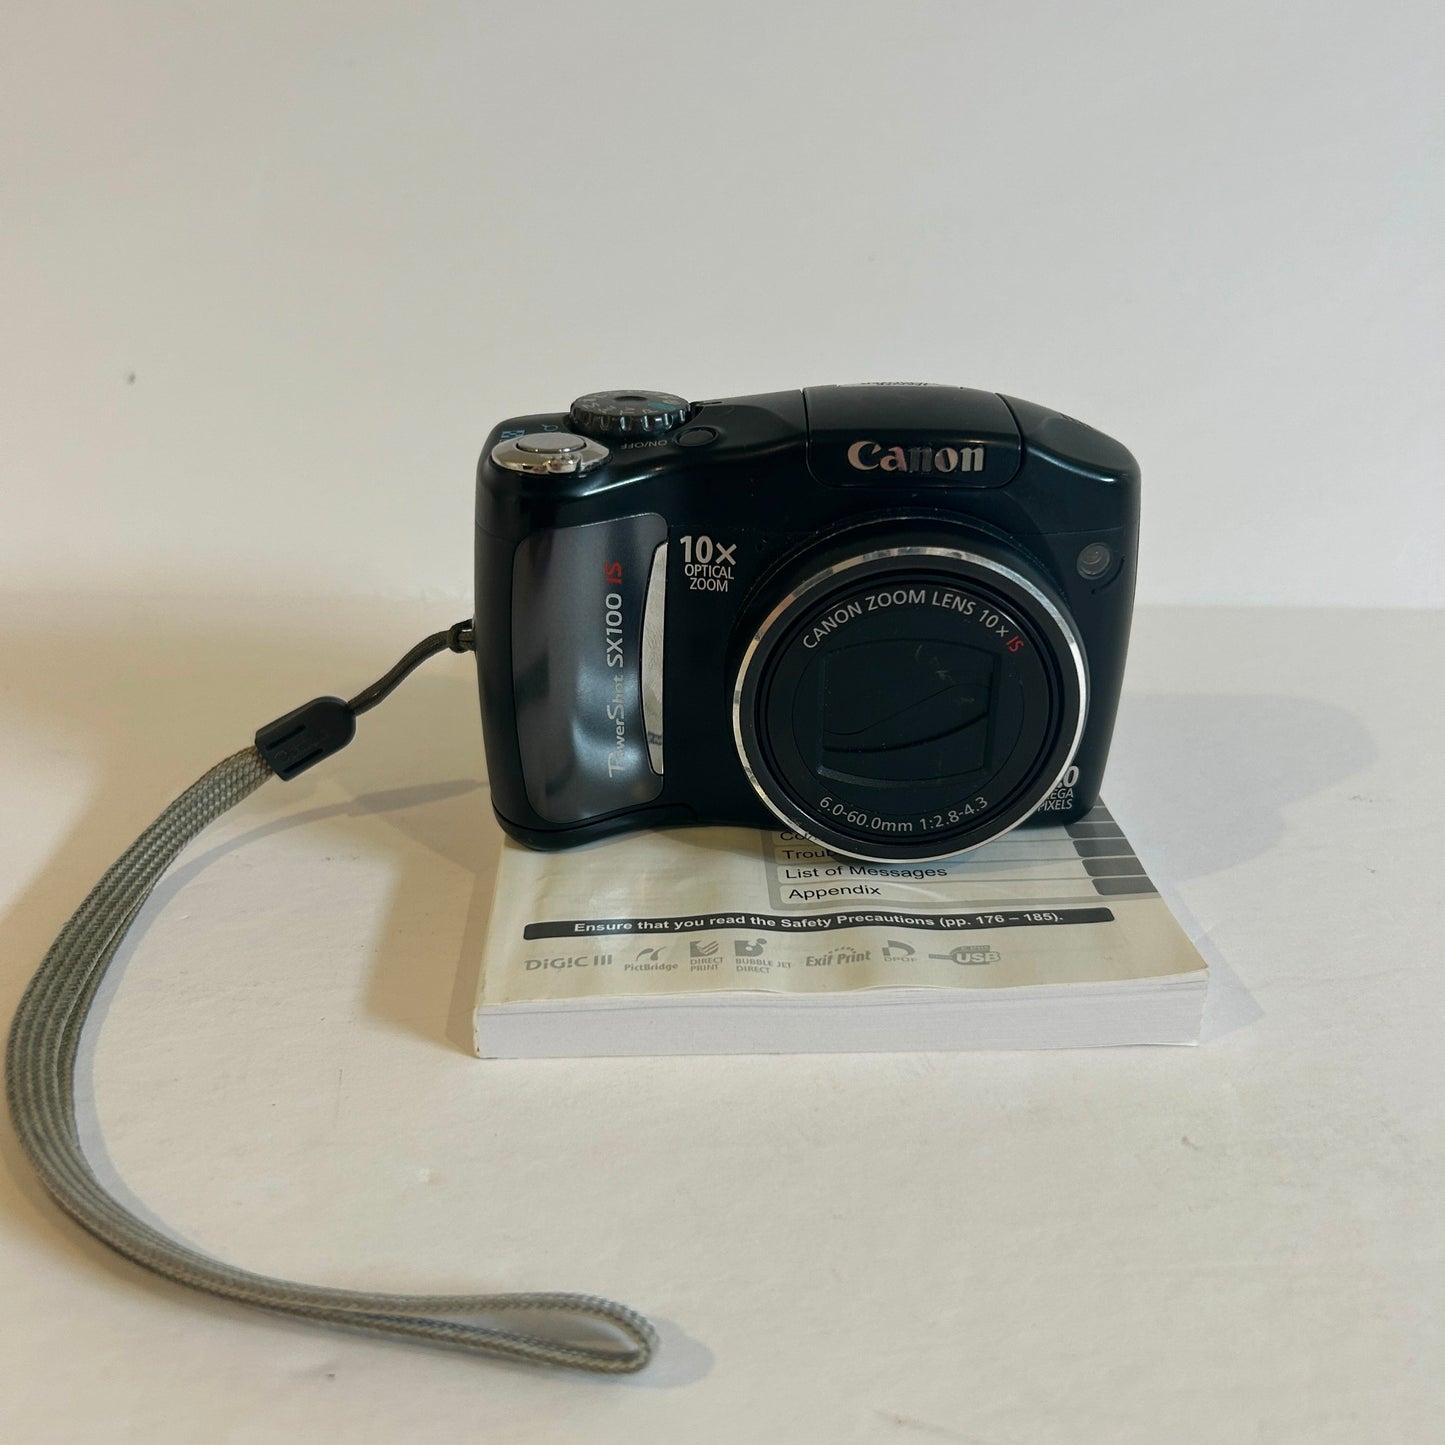 Canon PowerShot 8.0 MegaPixel SX1000 IS Digital Camera - PC1256